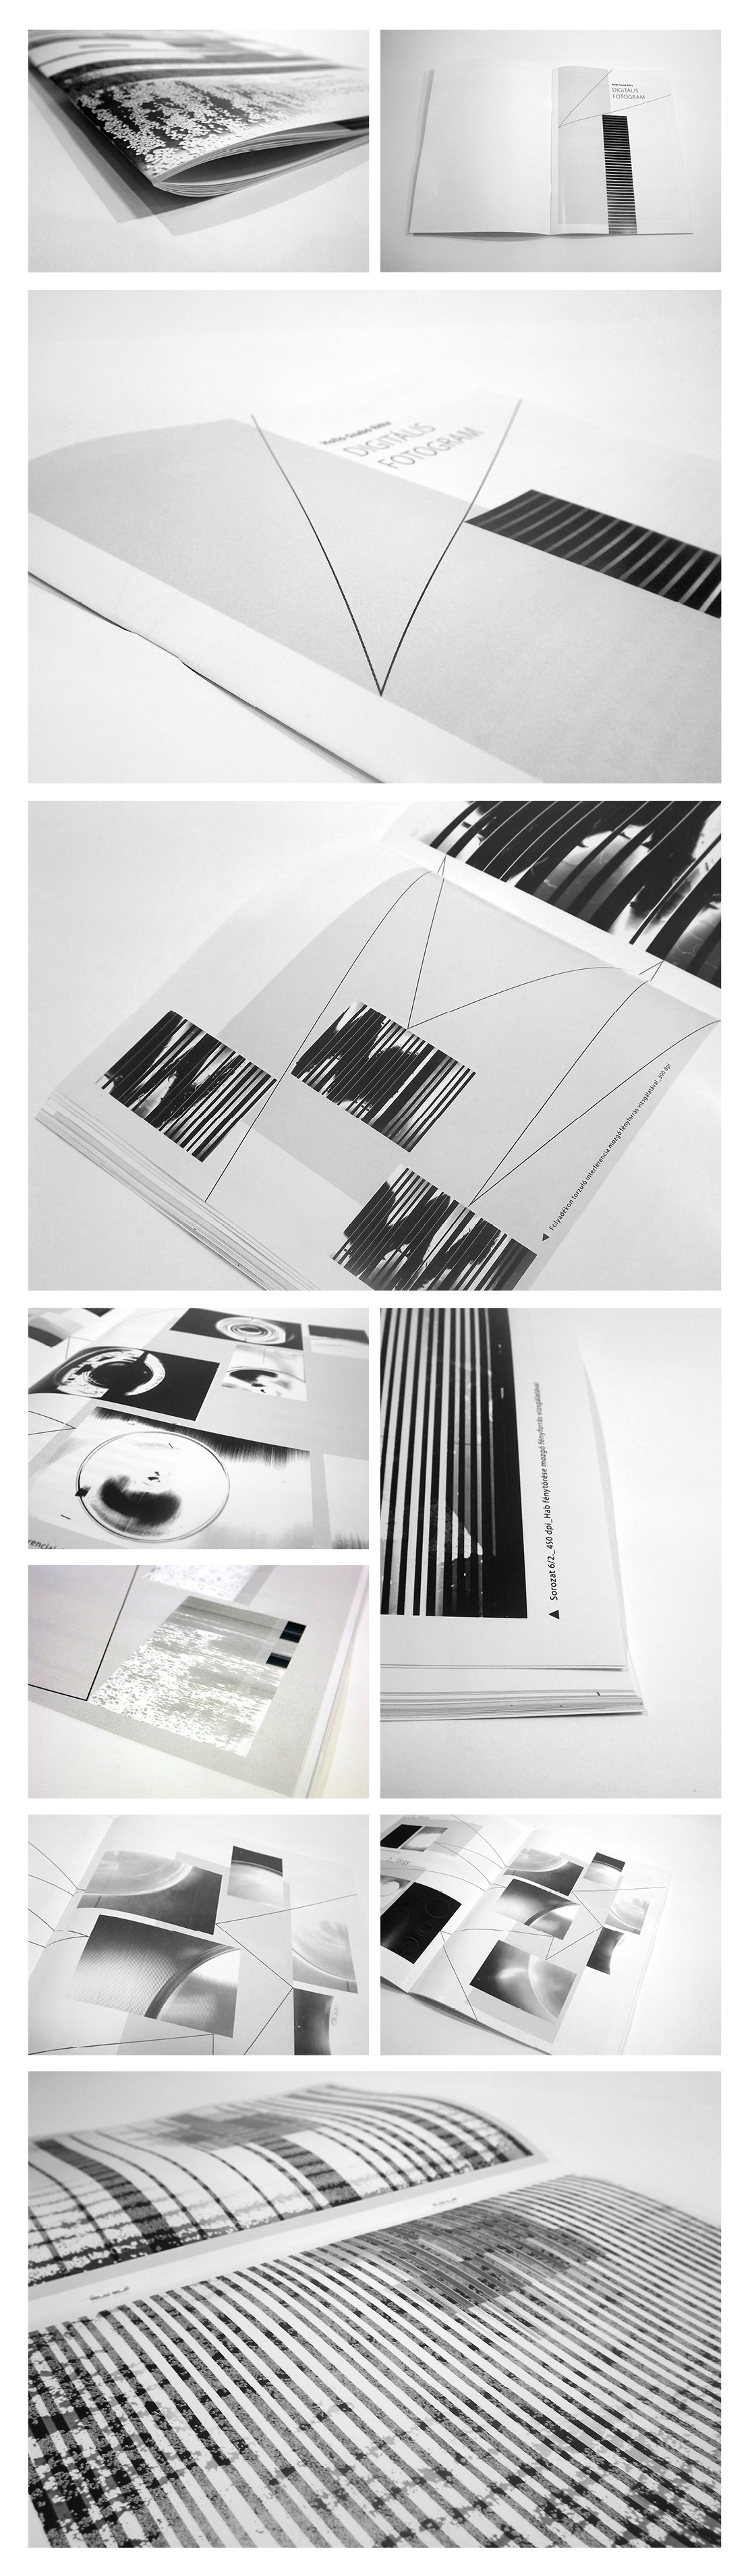 scanner Brehm book project book moholy digital digital fotogram fotogram black and white Glitch Glitch Design experiment glitch experiment